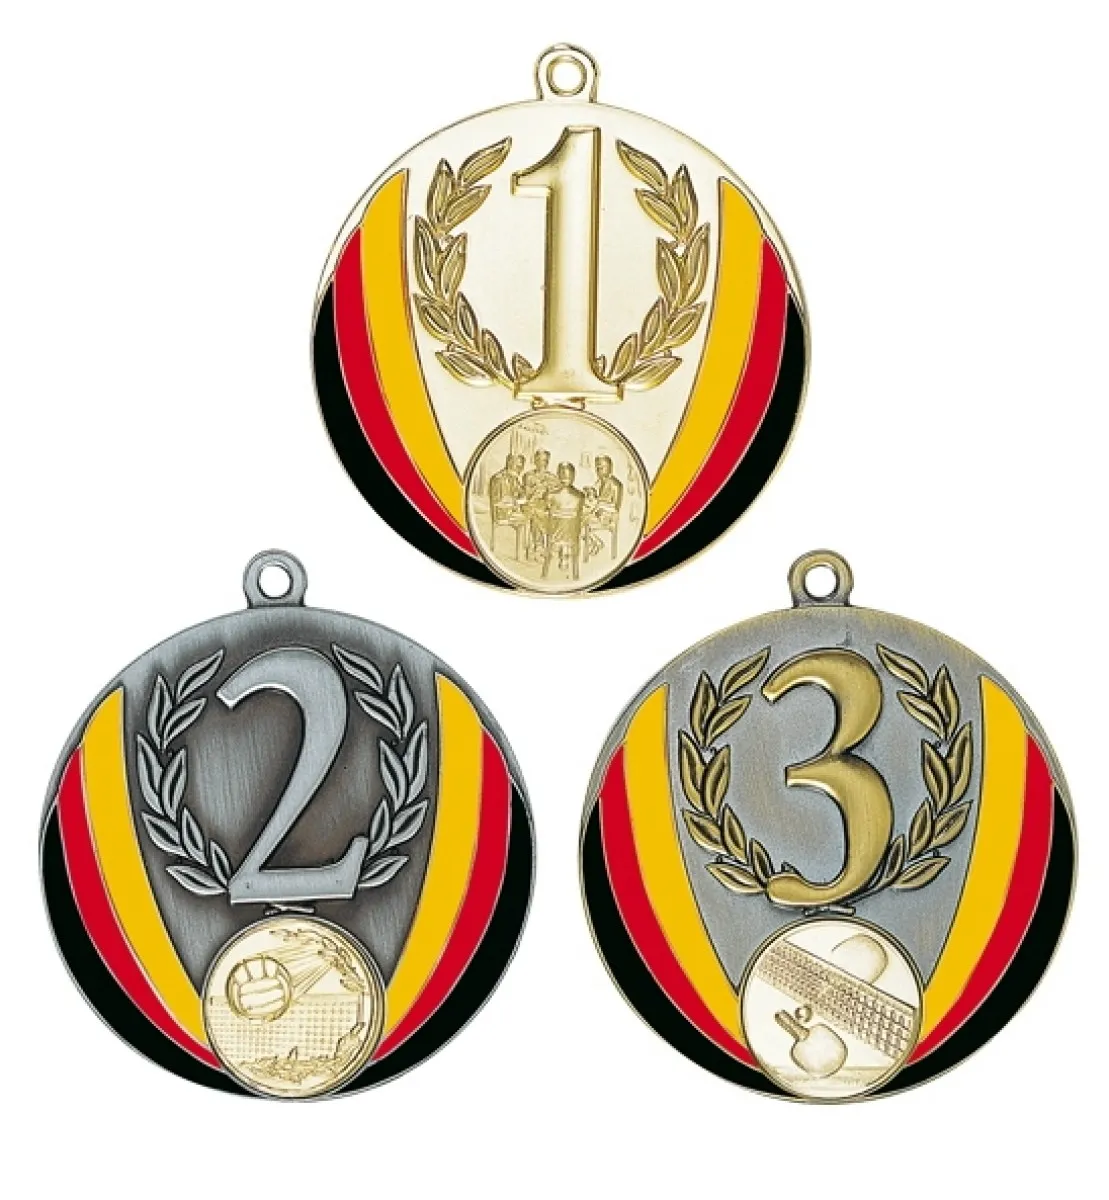 Medailles met Duitse vlaggen in goud, zilver of brons. Diameter ca. 7 cm. Embleemgrootte 2,5 cm.